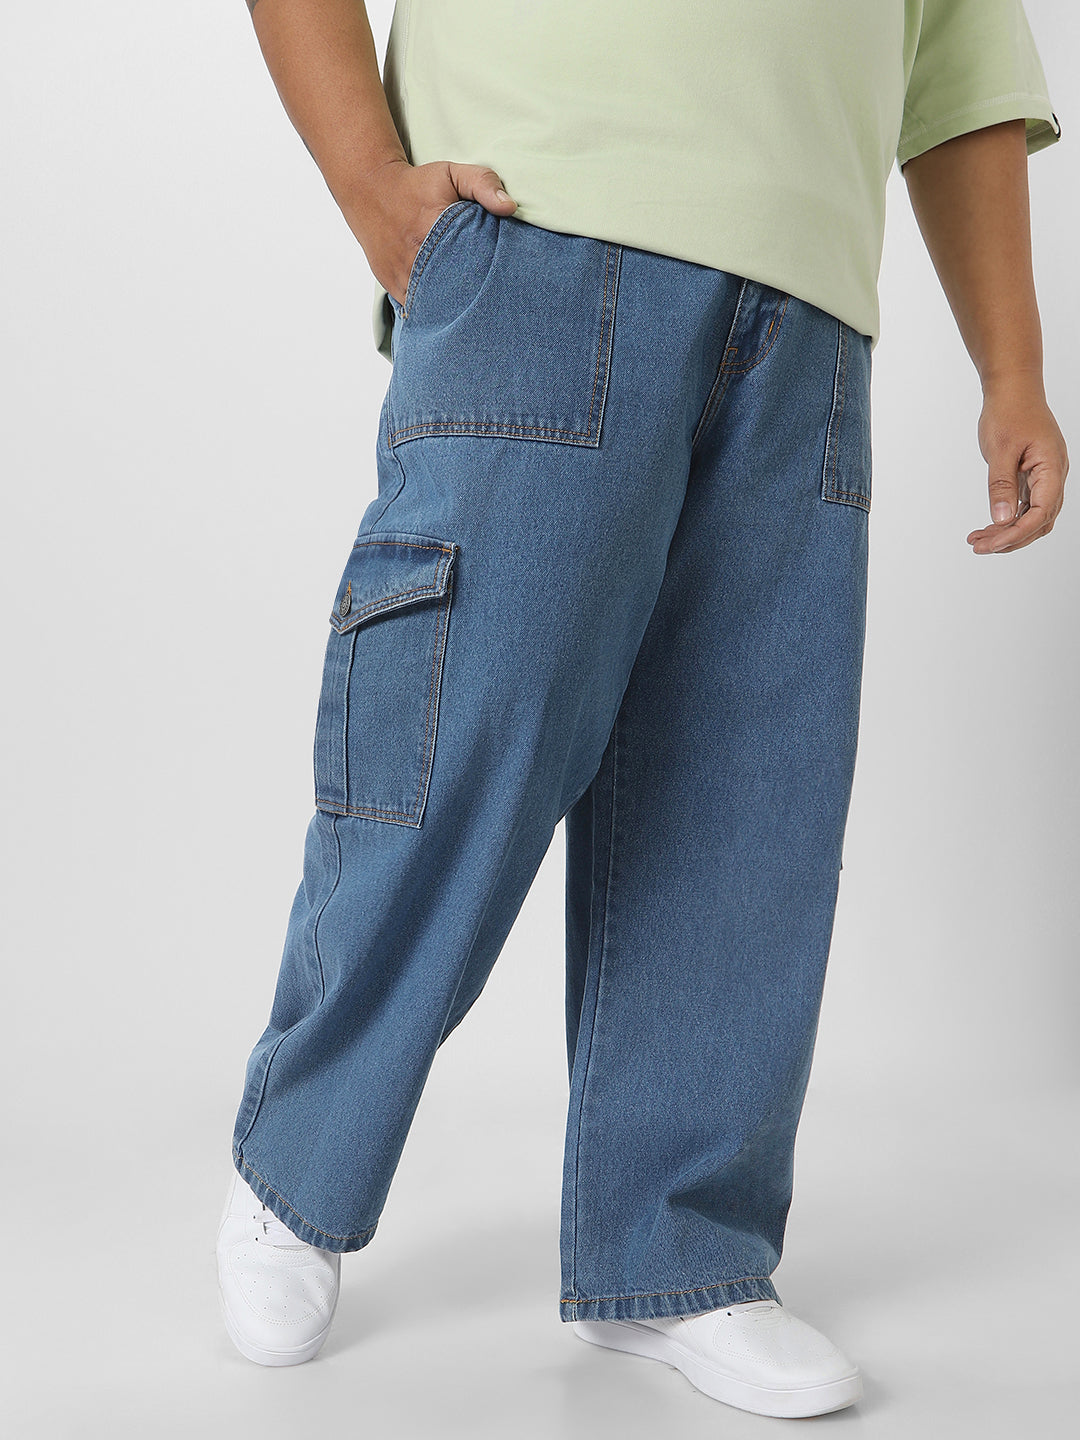 Shop Plus Size Jeans | Trendy & Comfortable Denim Collection - Urbano ...